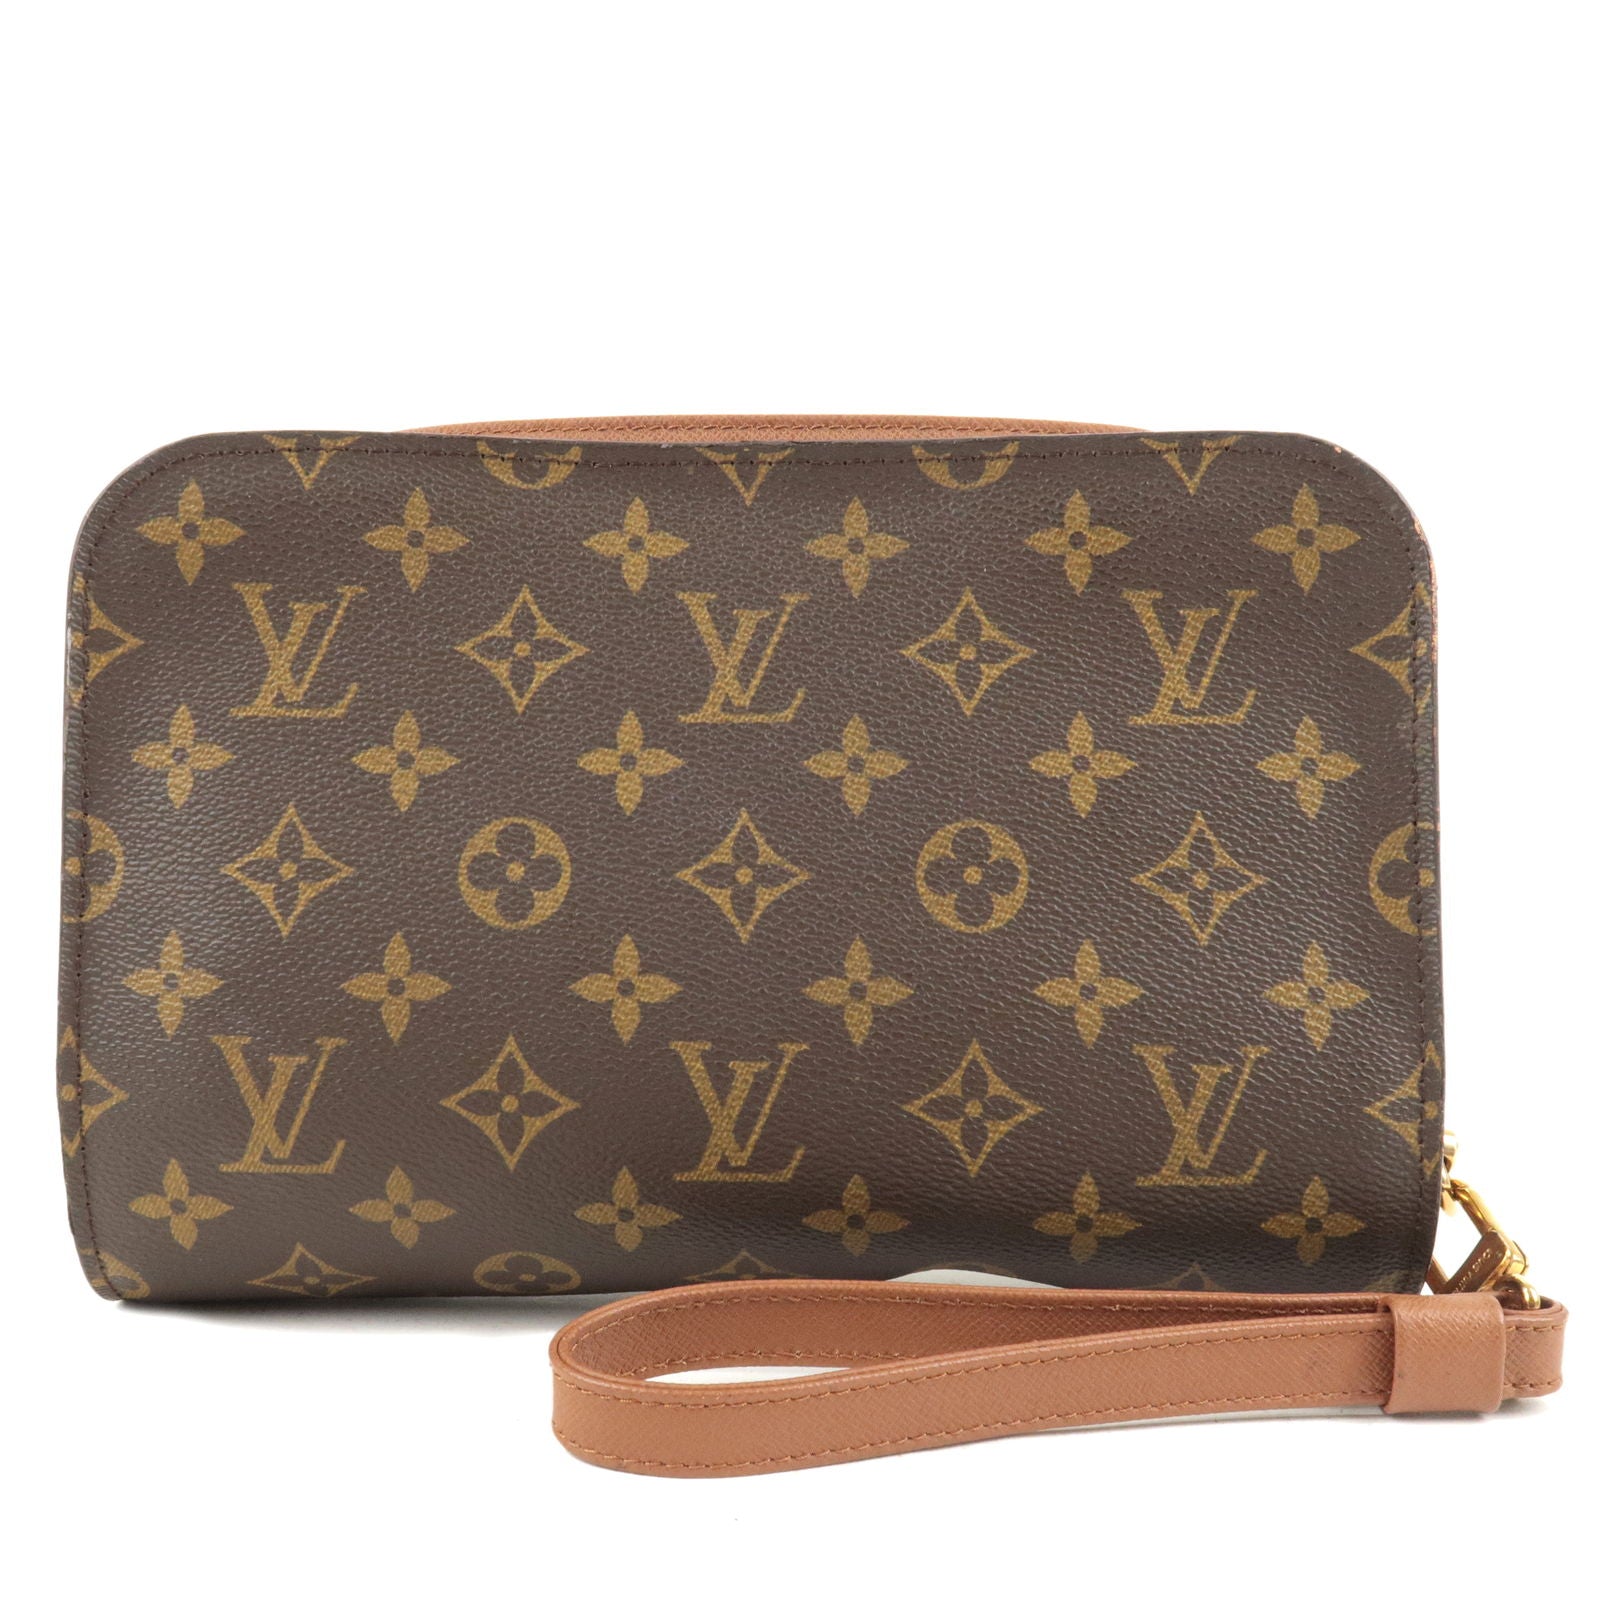 LV Orsay clutch  Vuitton, Louis vuitton monogram, Clutch